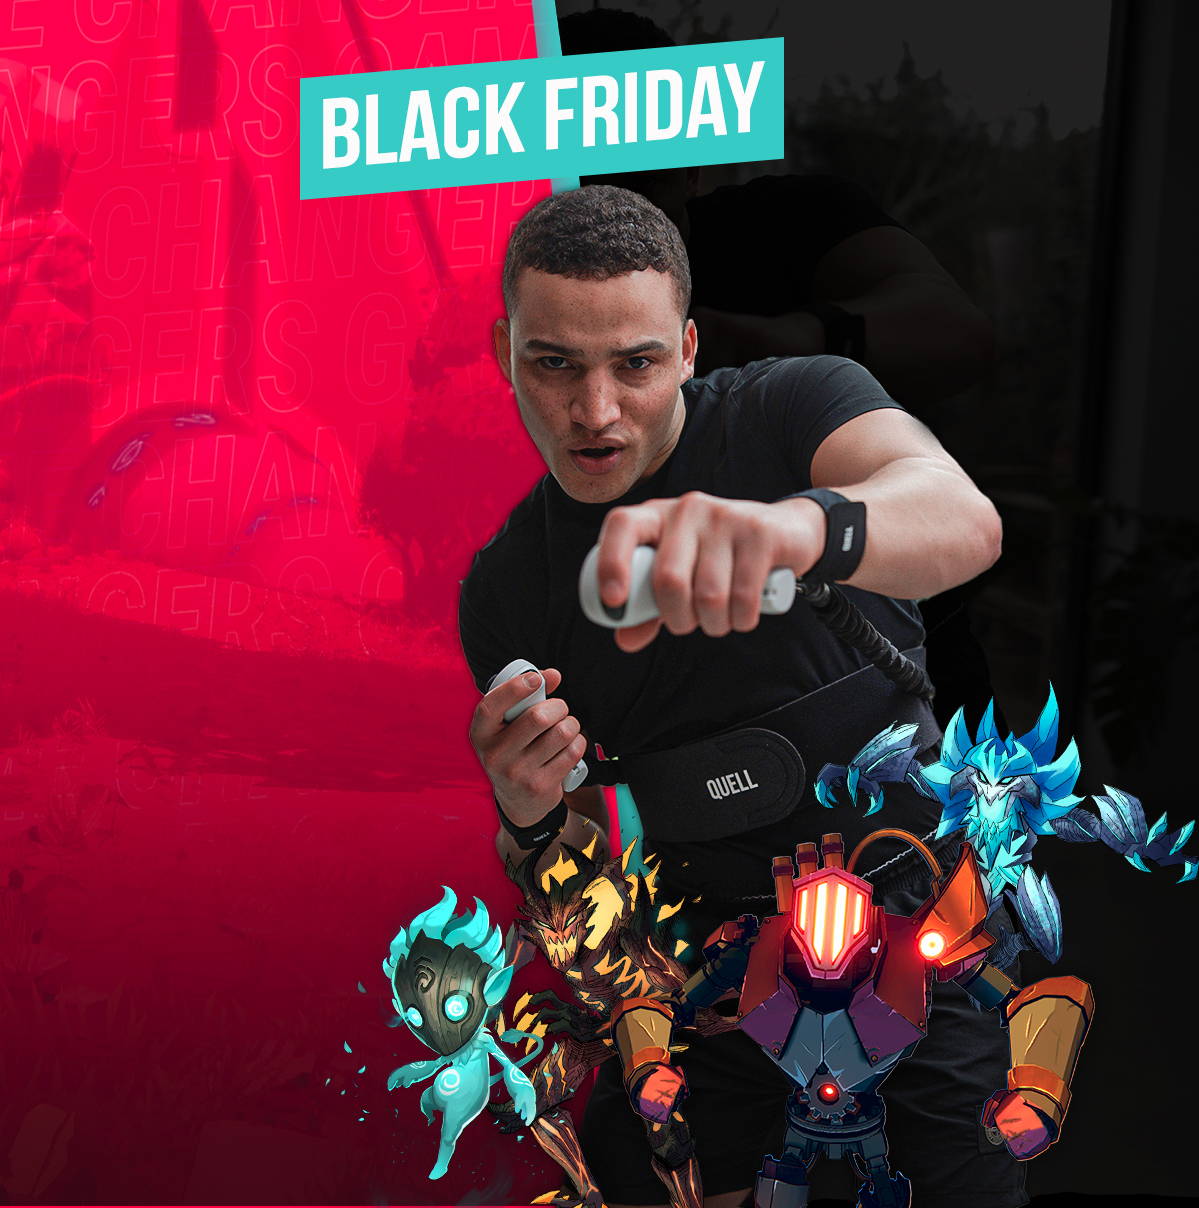 Black Friday Gaming Deals